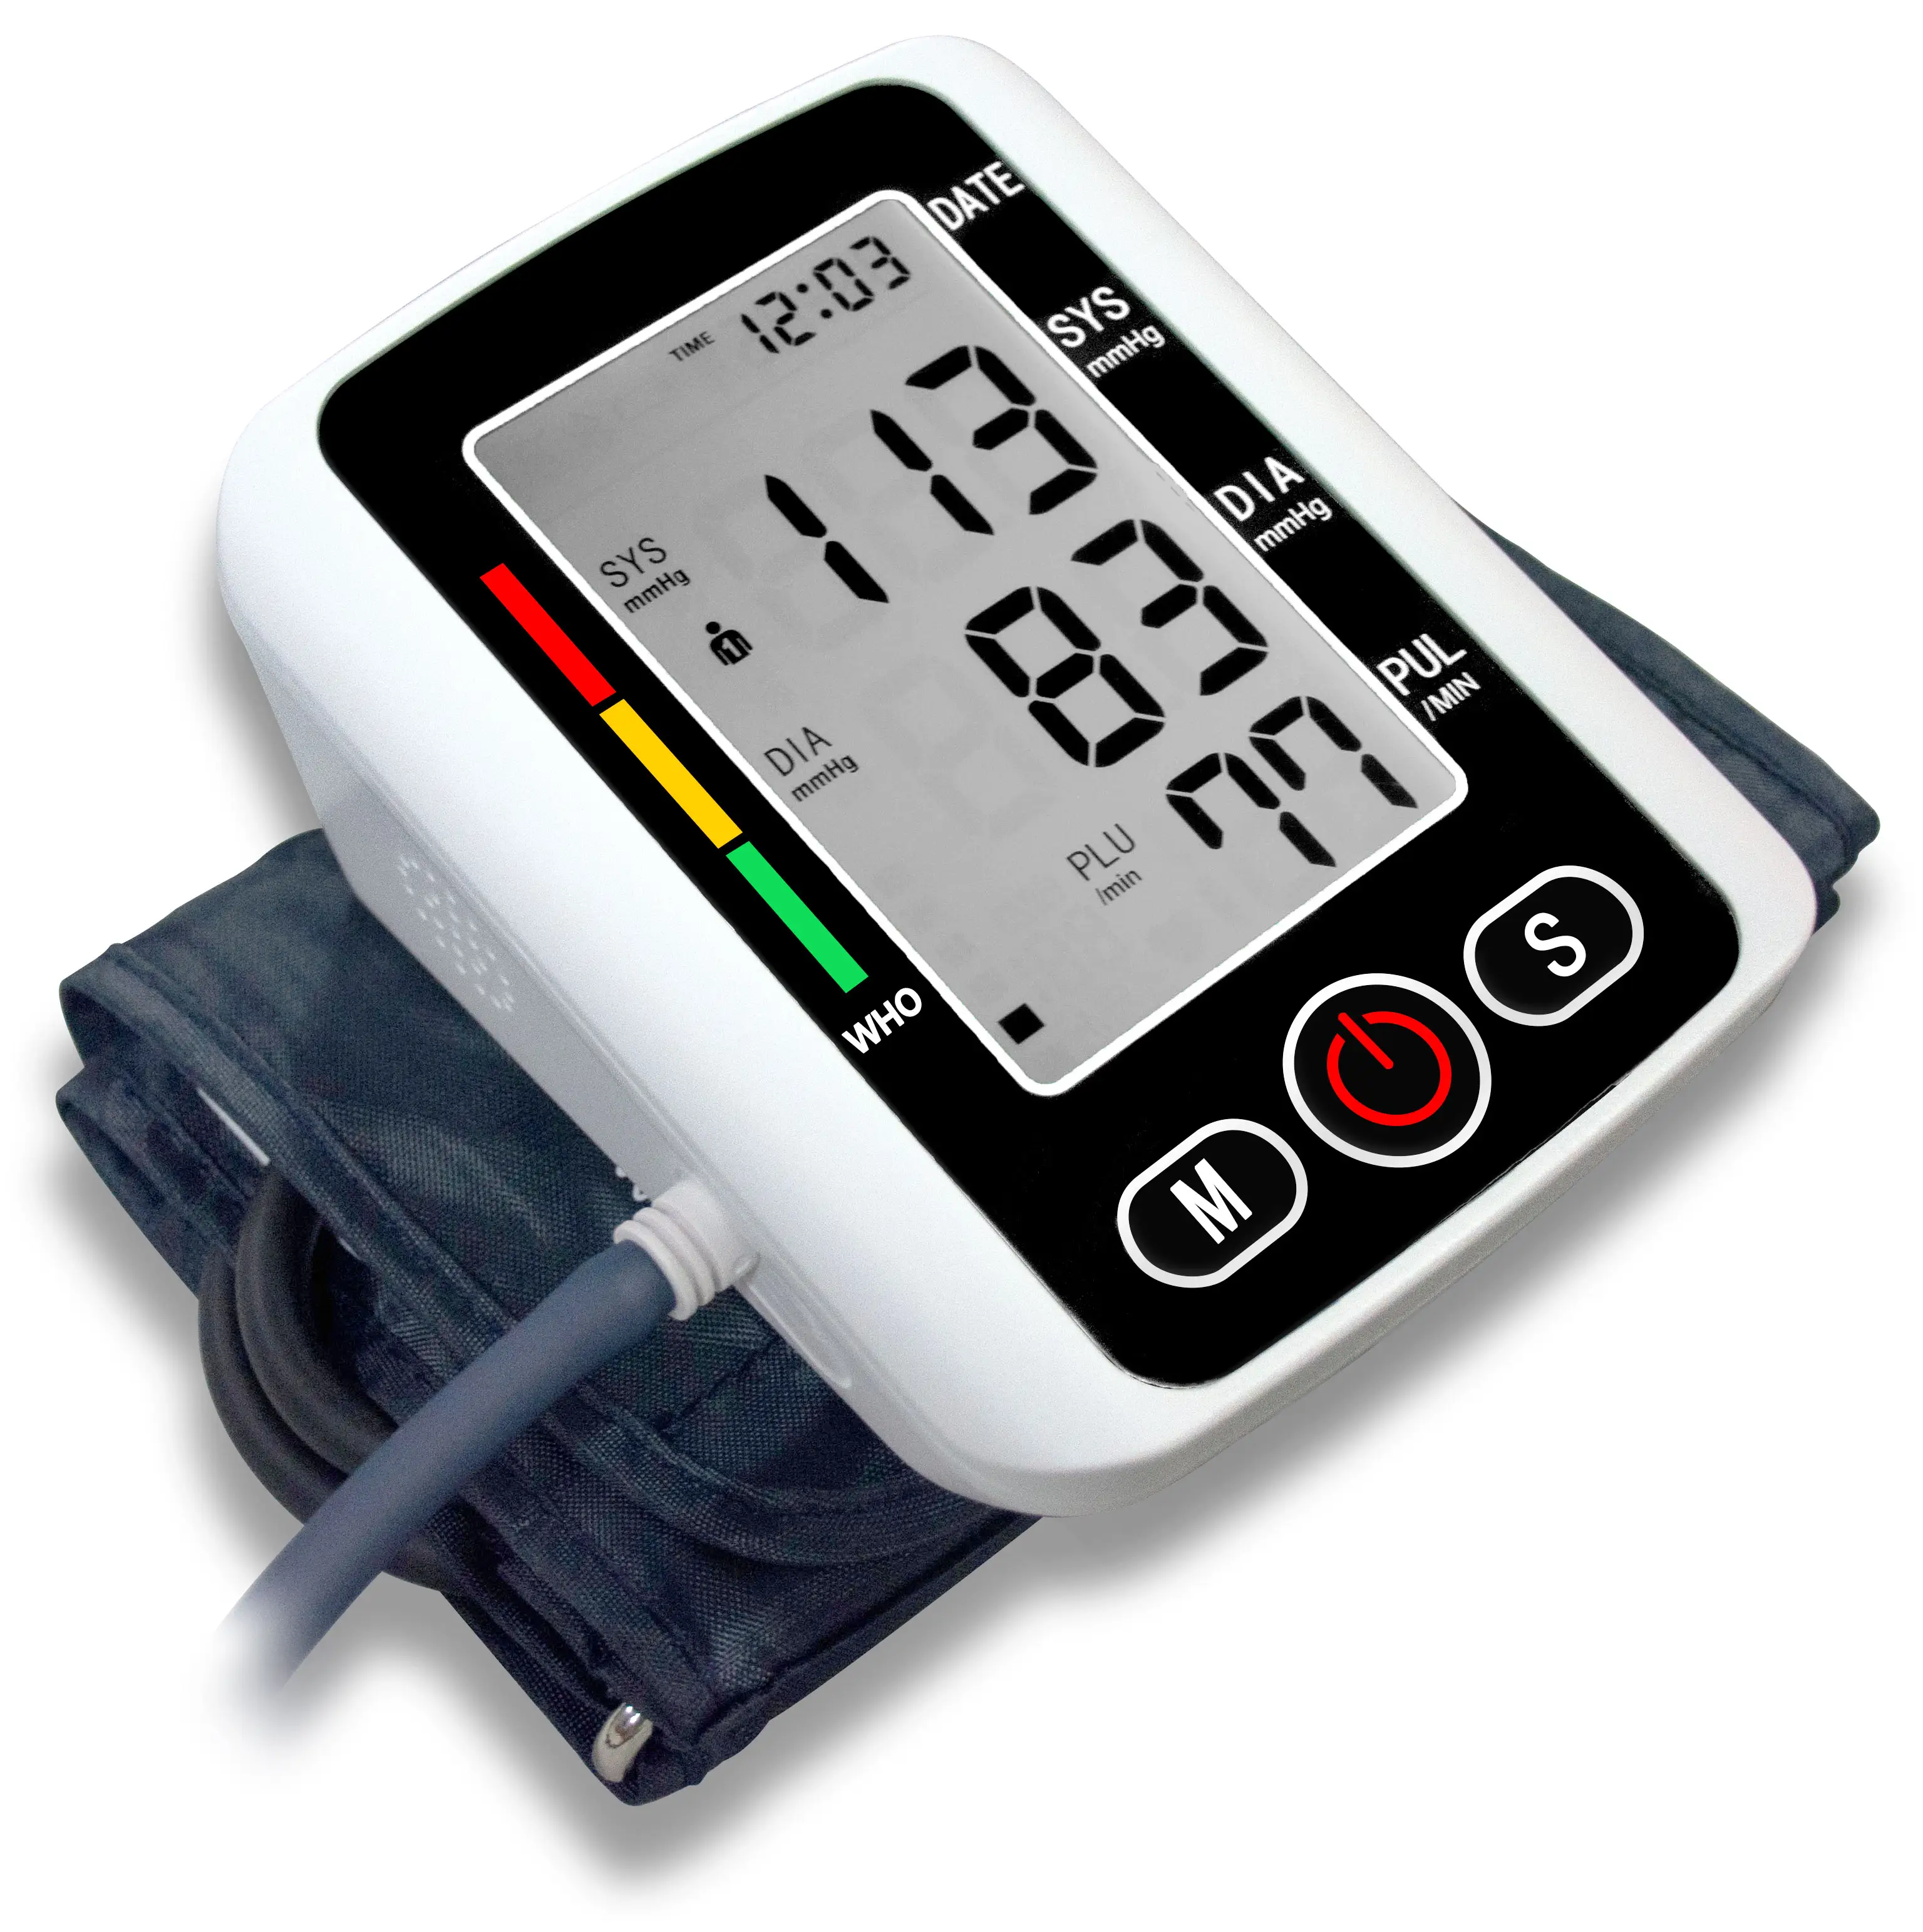 Hospital Arm type Blood pressure monitor bp machine blood pressure monitor arm with Voice Broadcast